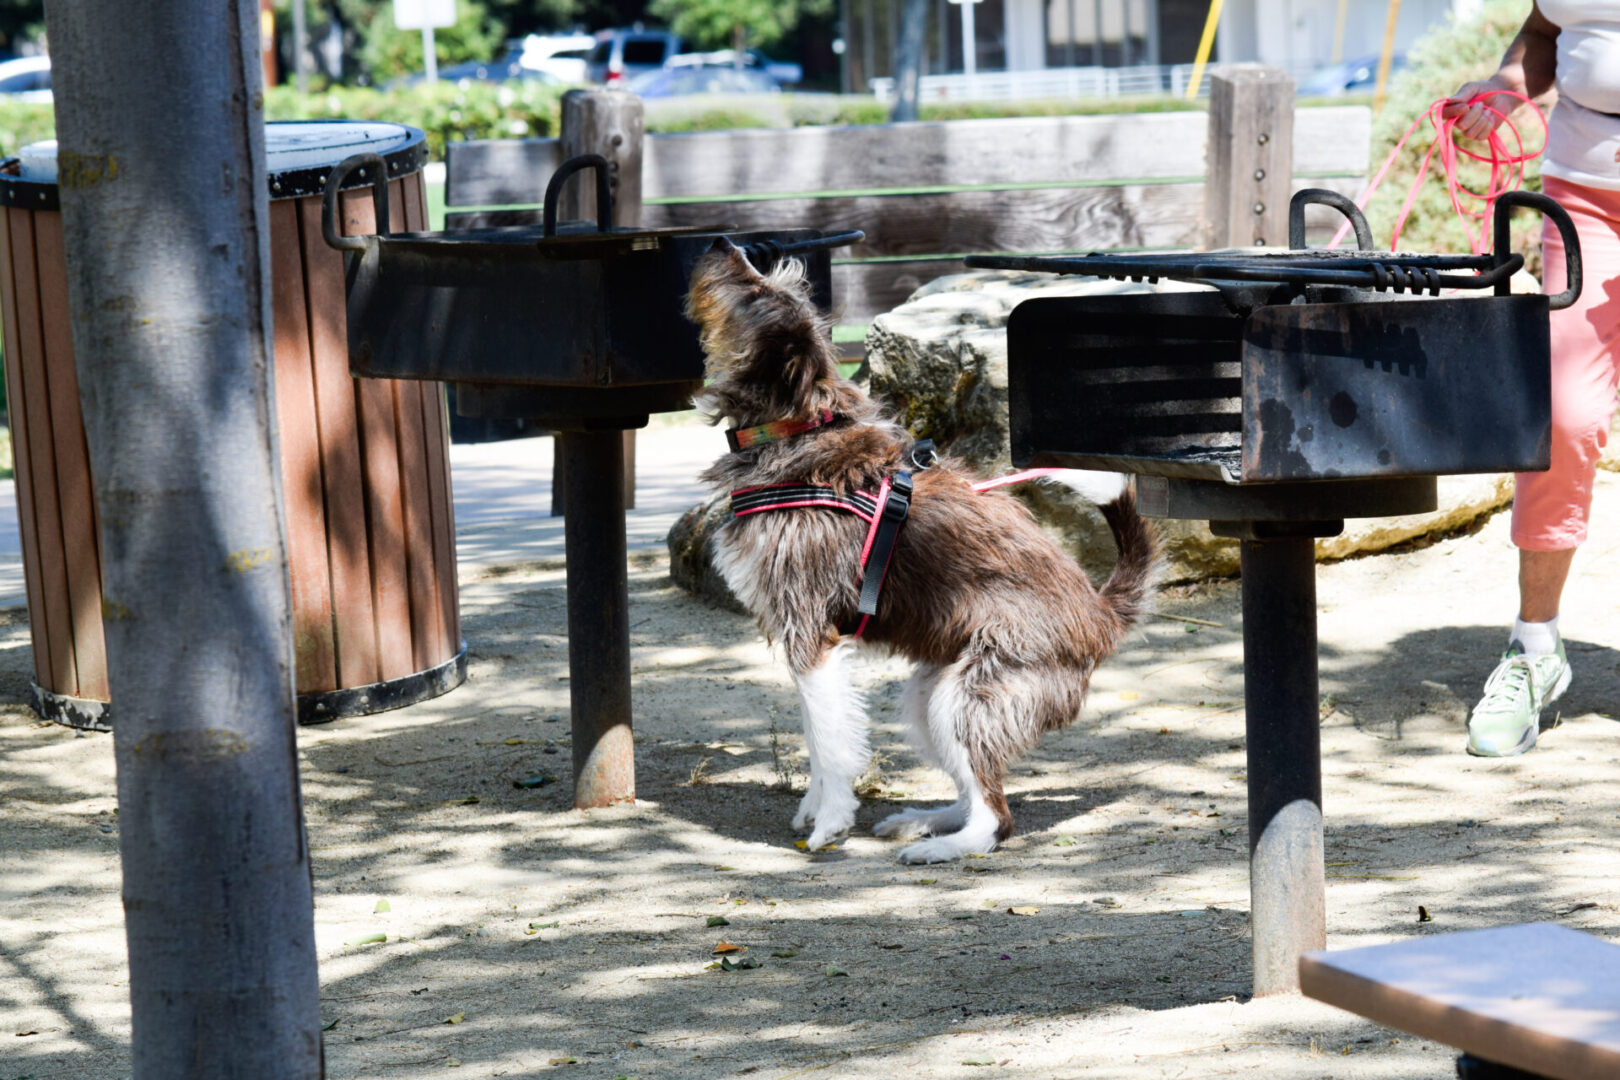 Dog works through barbeque smells to find odor practicing scent work